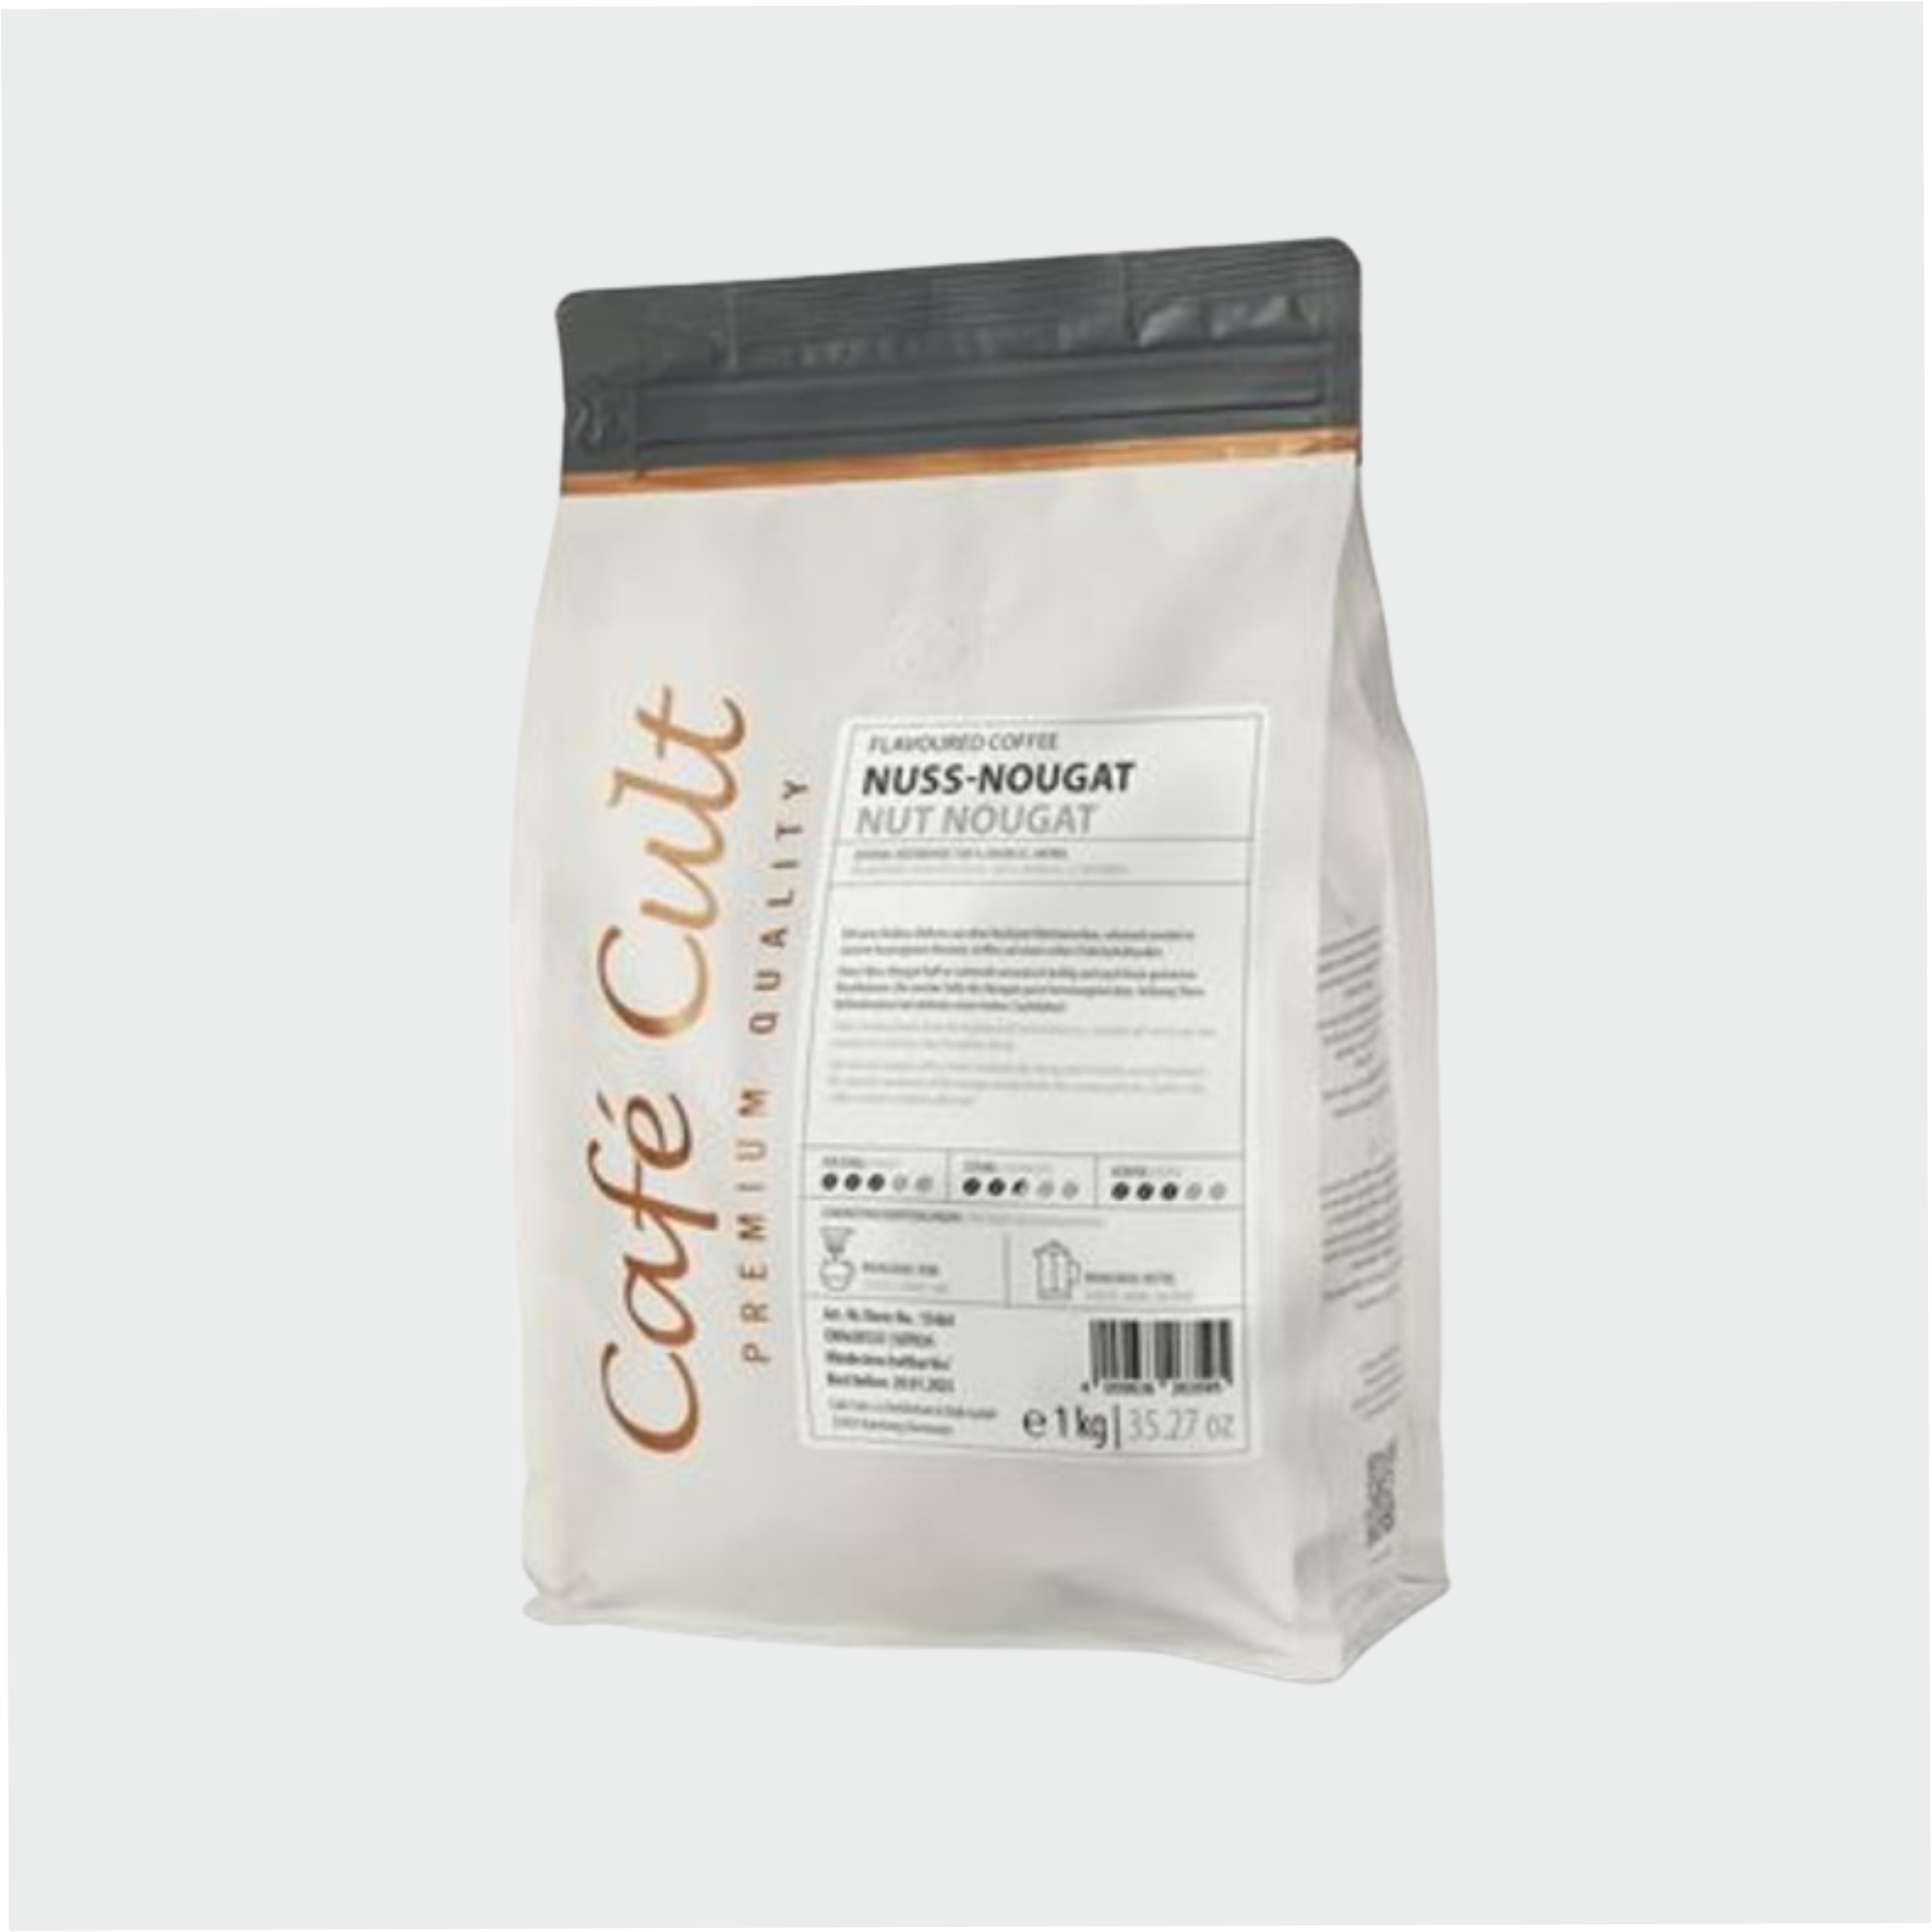 Nuss-Nougat-Creme-Kaffee im 1 kg Beutel aromatisiert